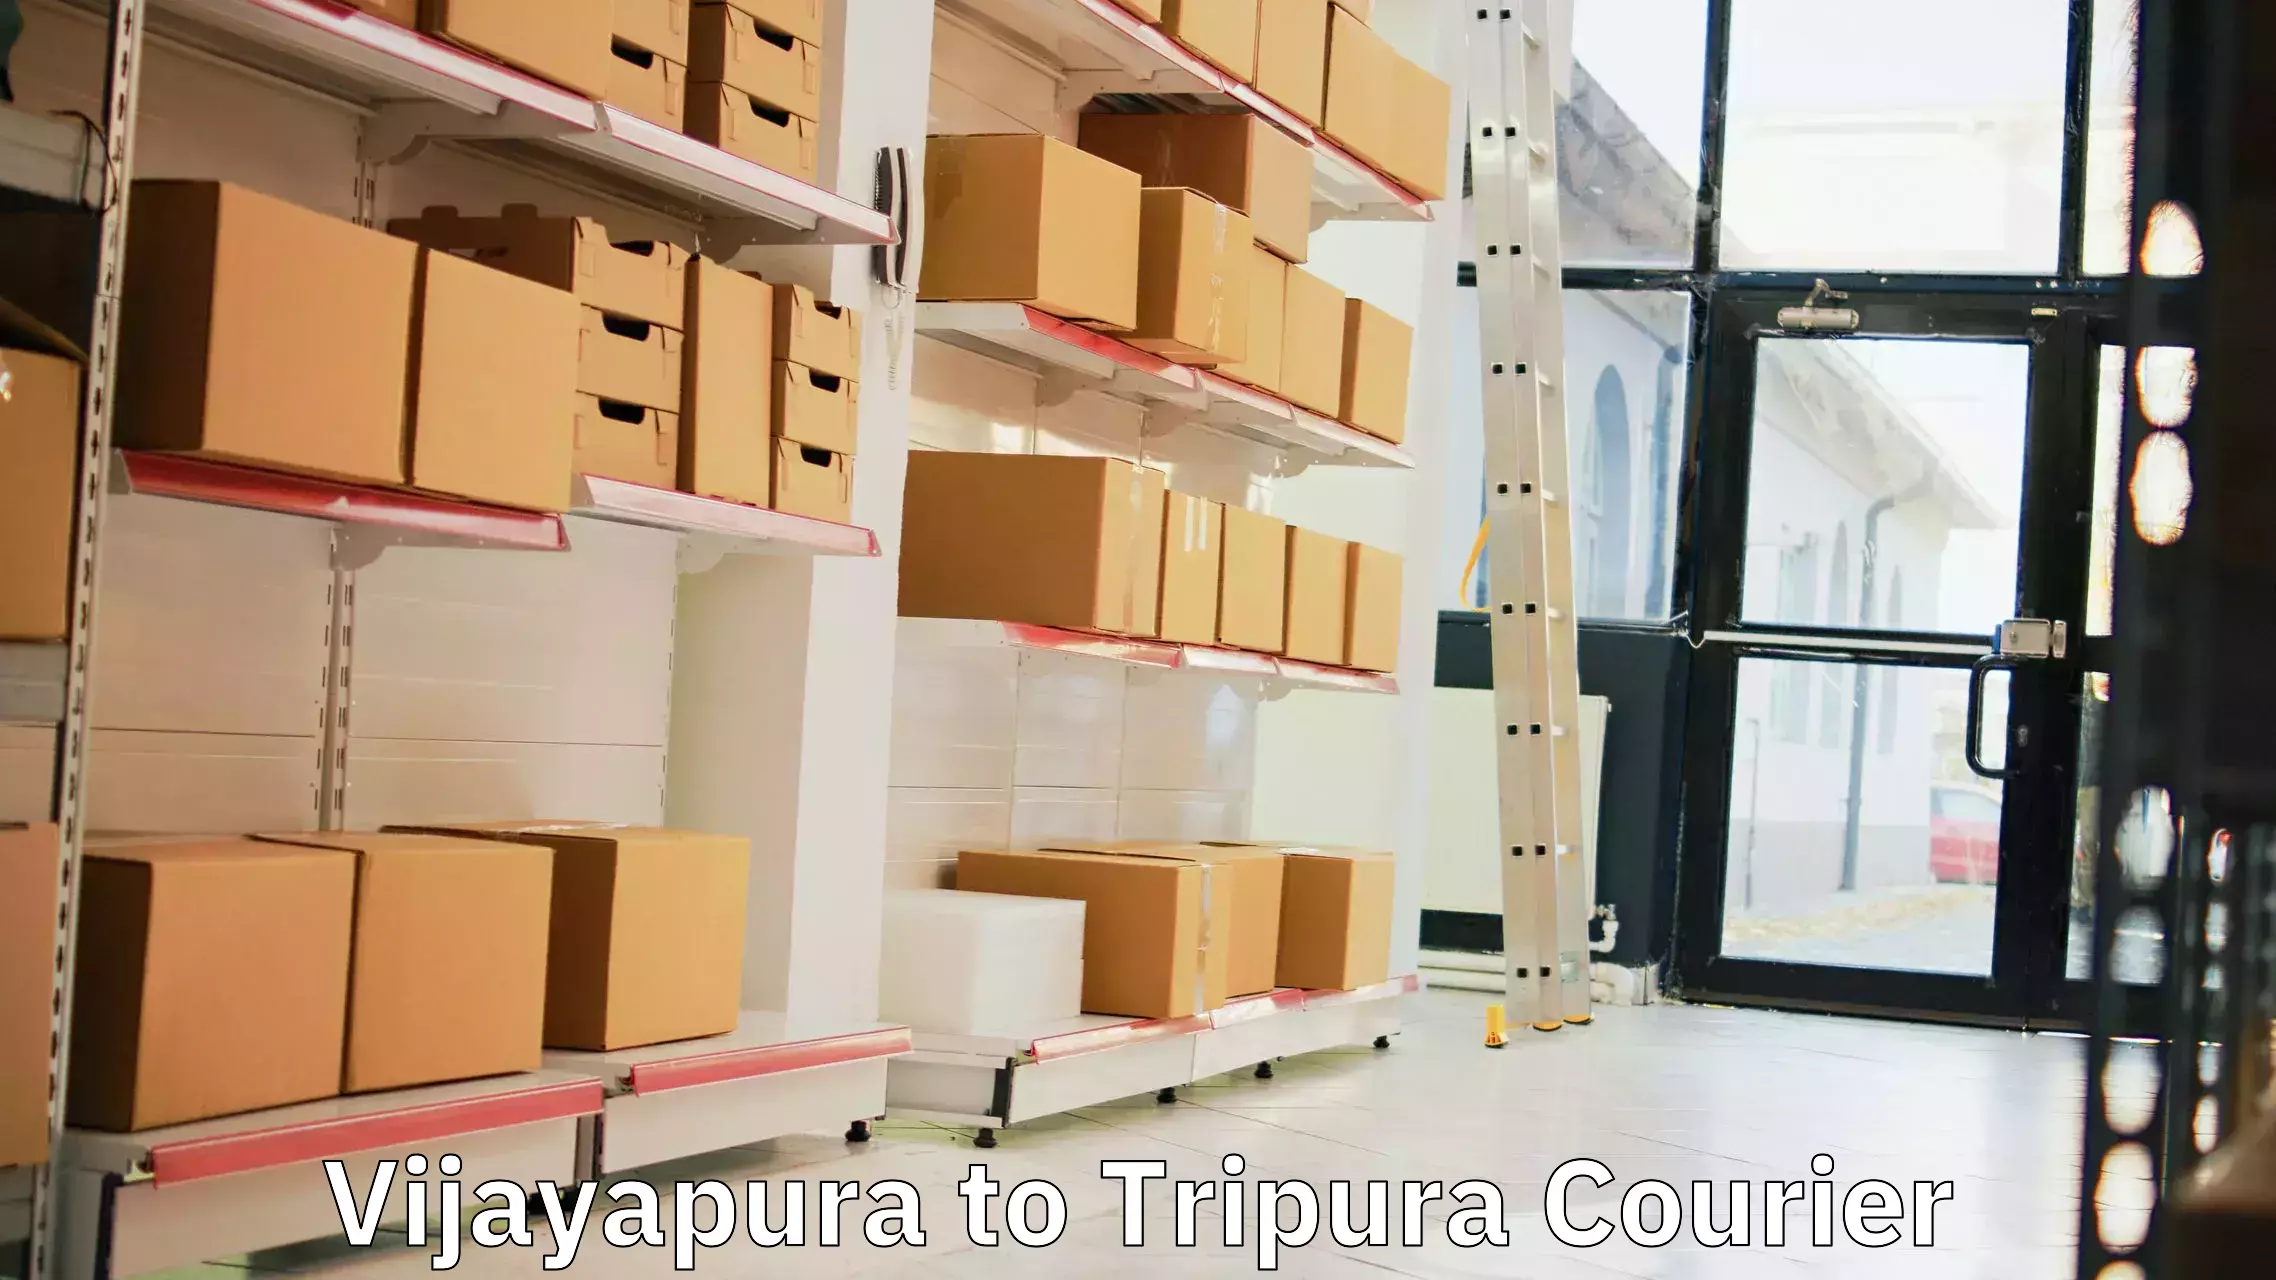 Courier service innovation Vijayapura to Manughat